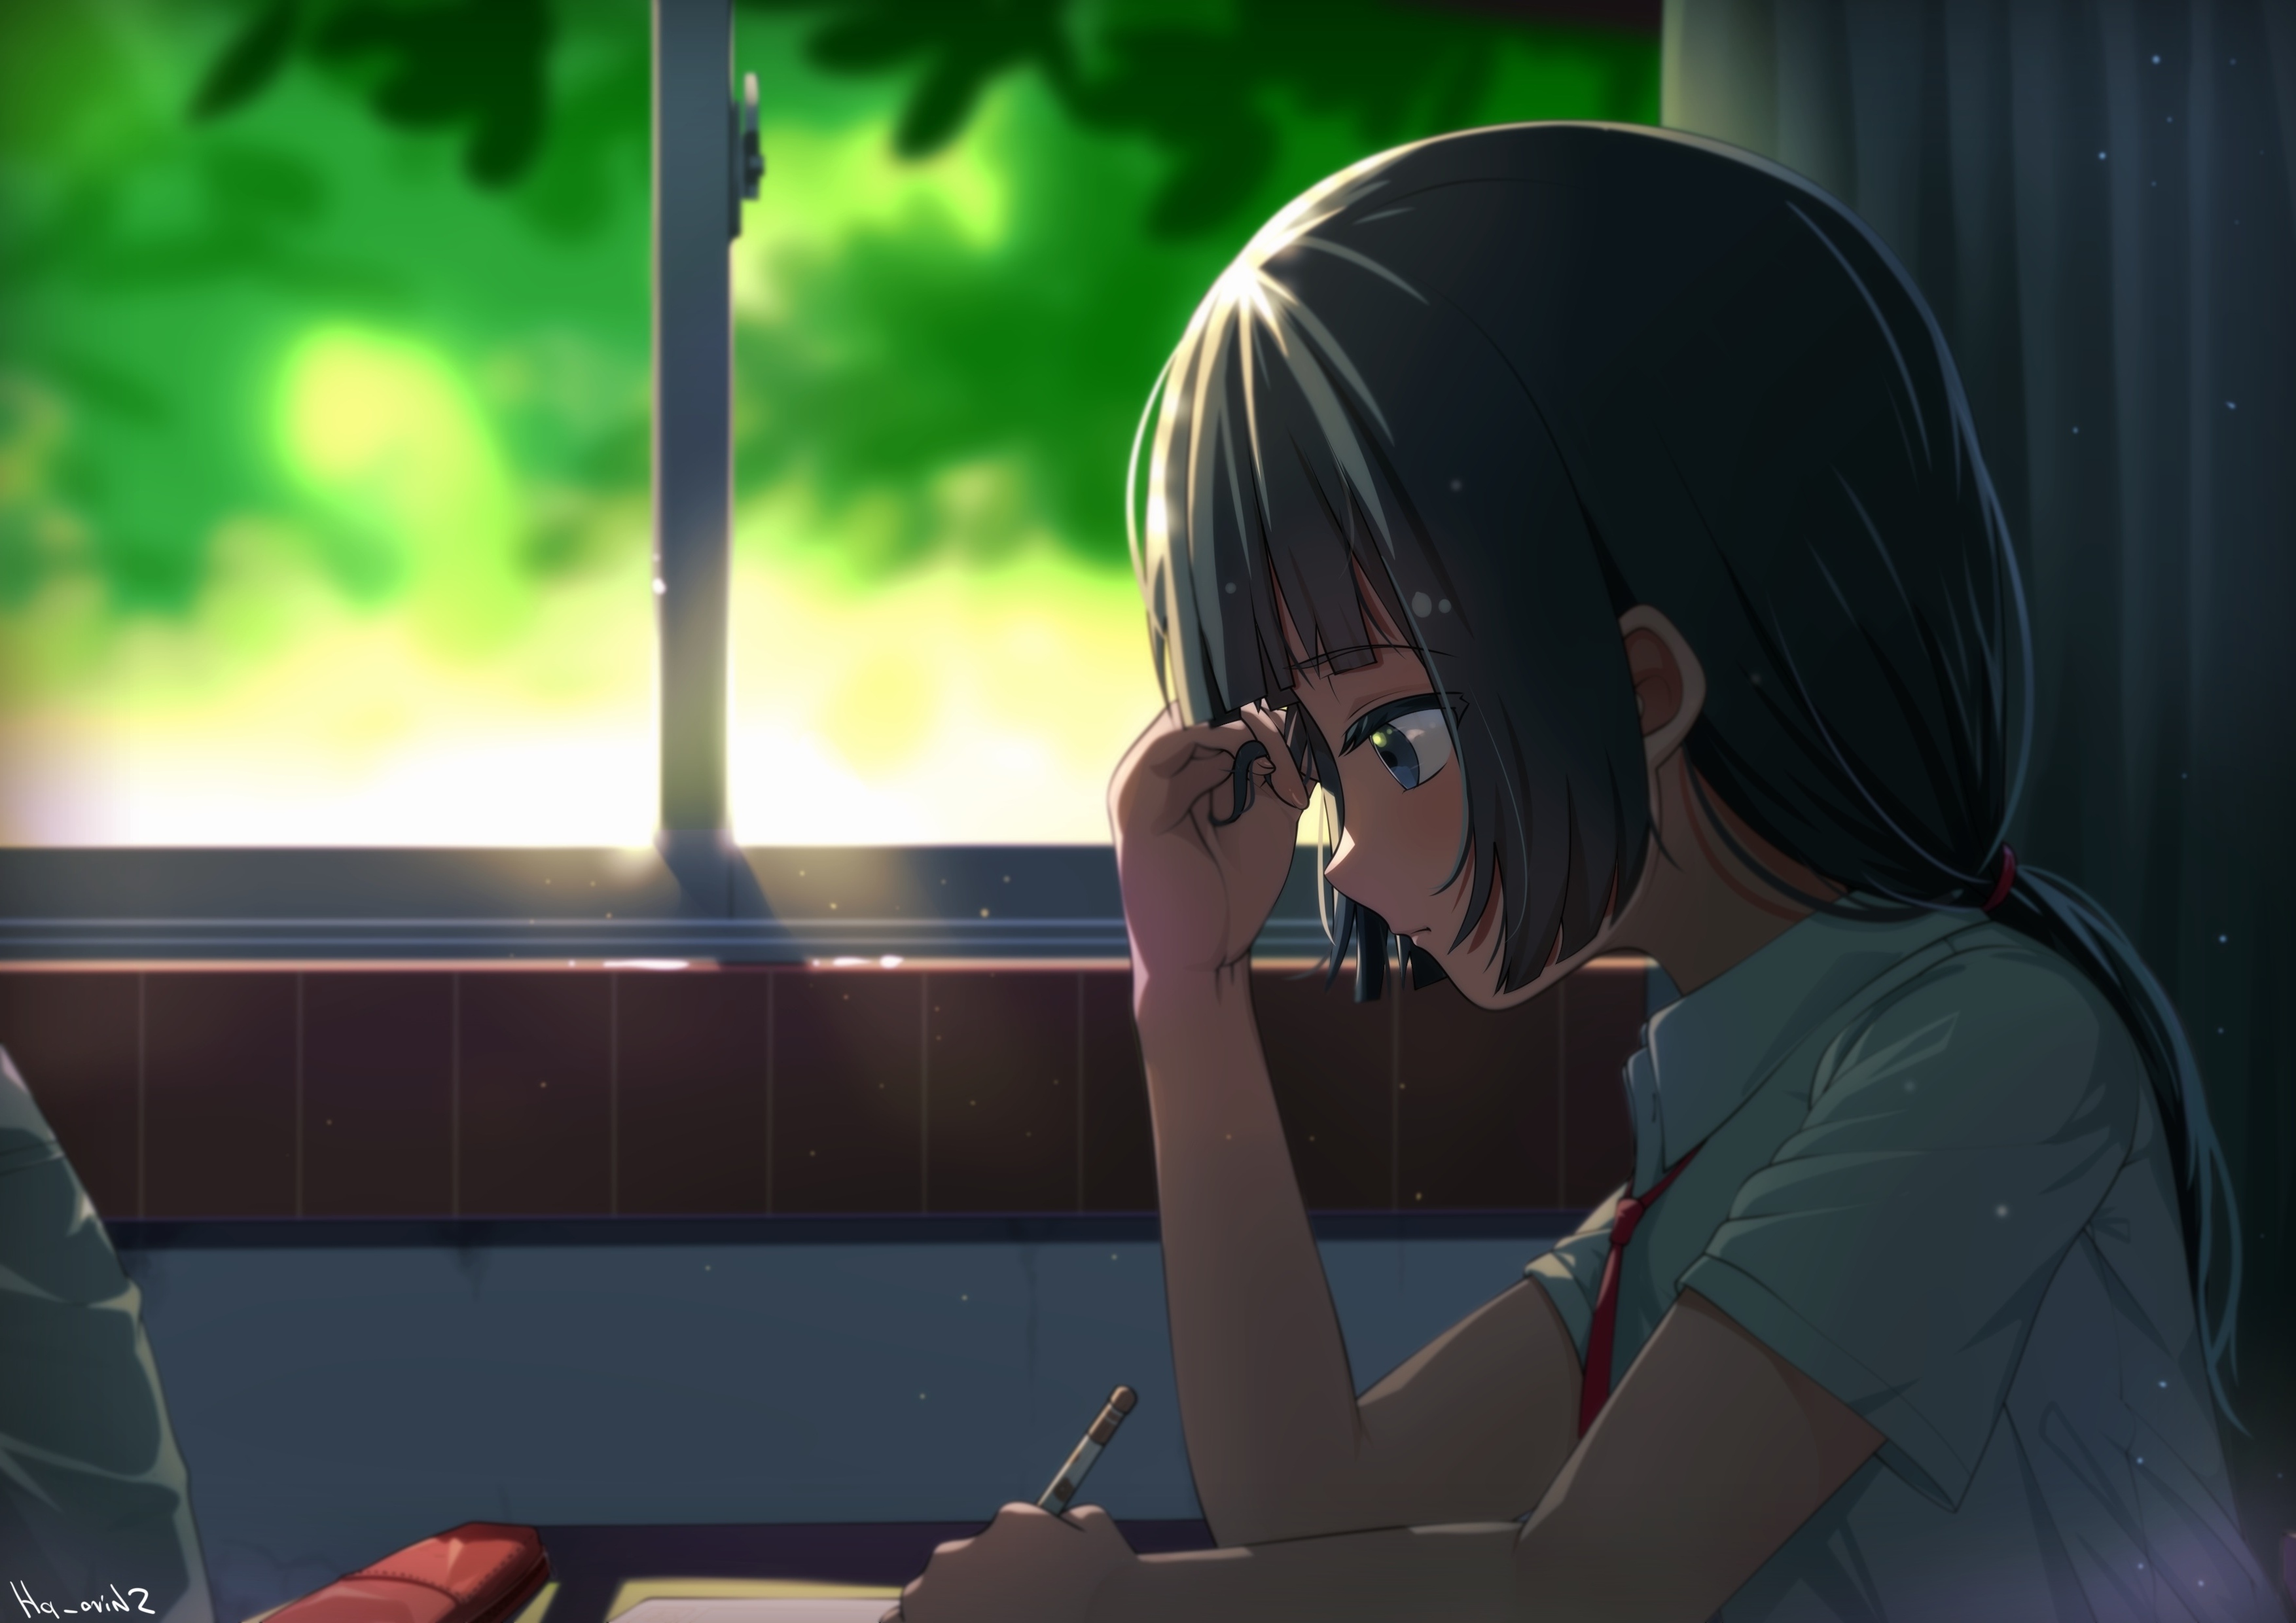 Wallpaper Windows, Studying, Classroom, Profile View, Ponytail, Anime Girl:3508x2480